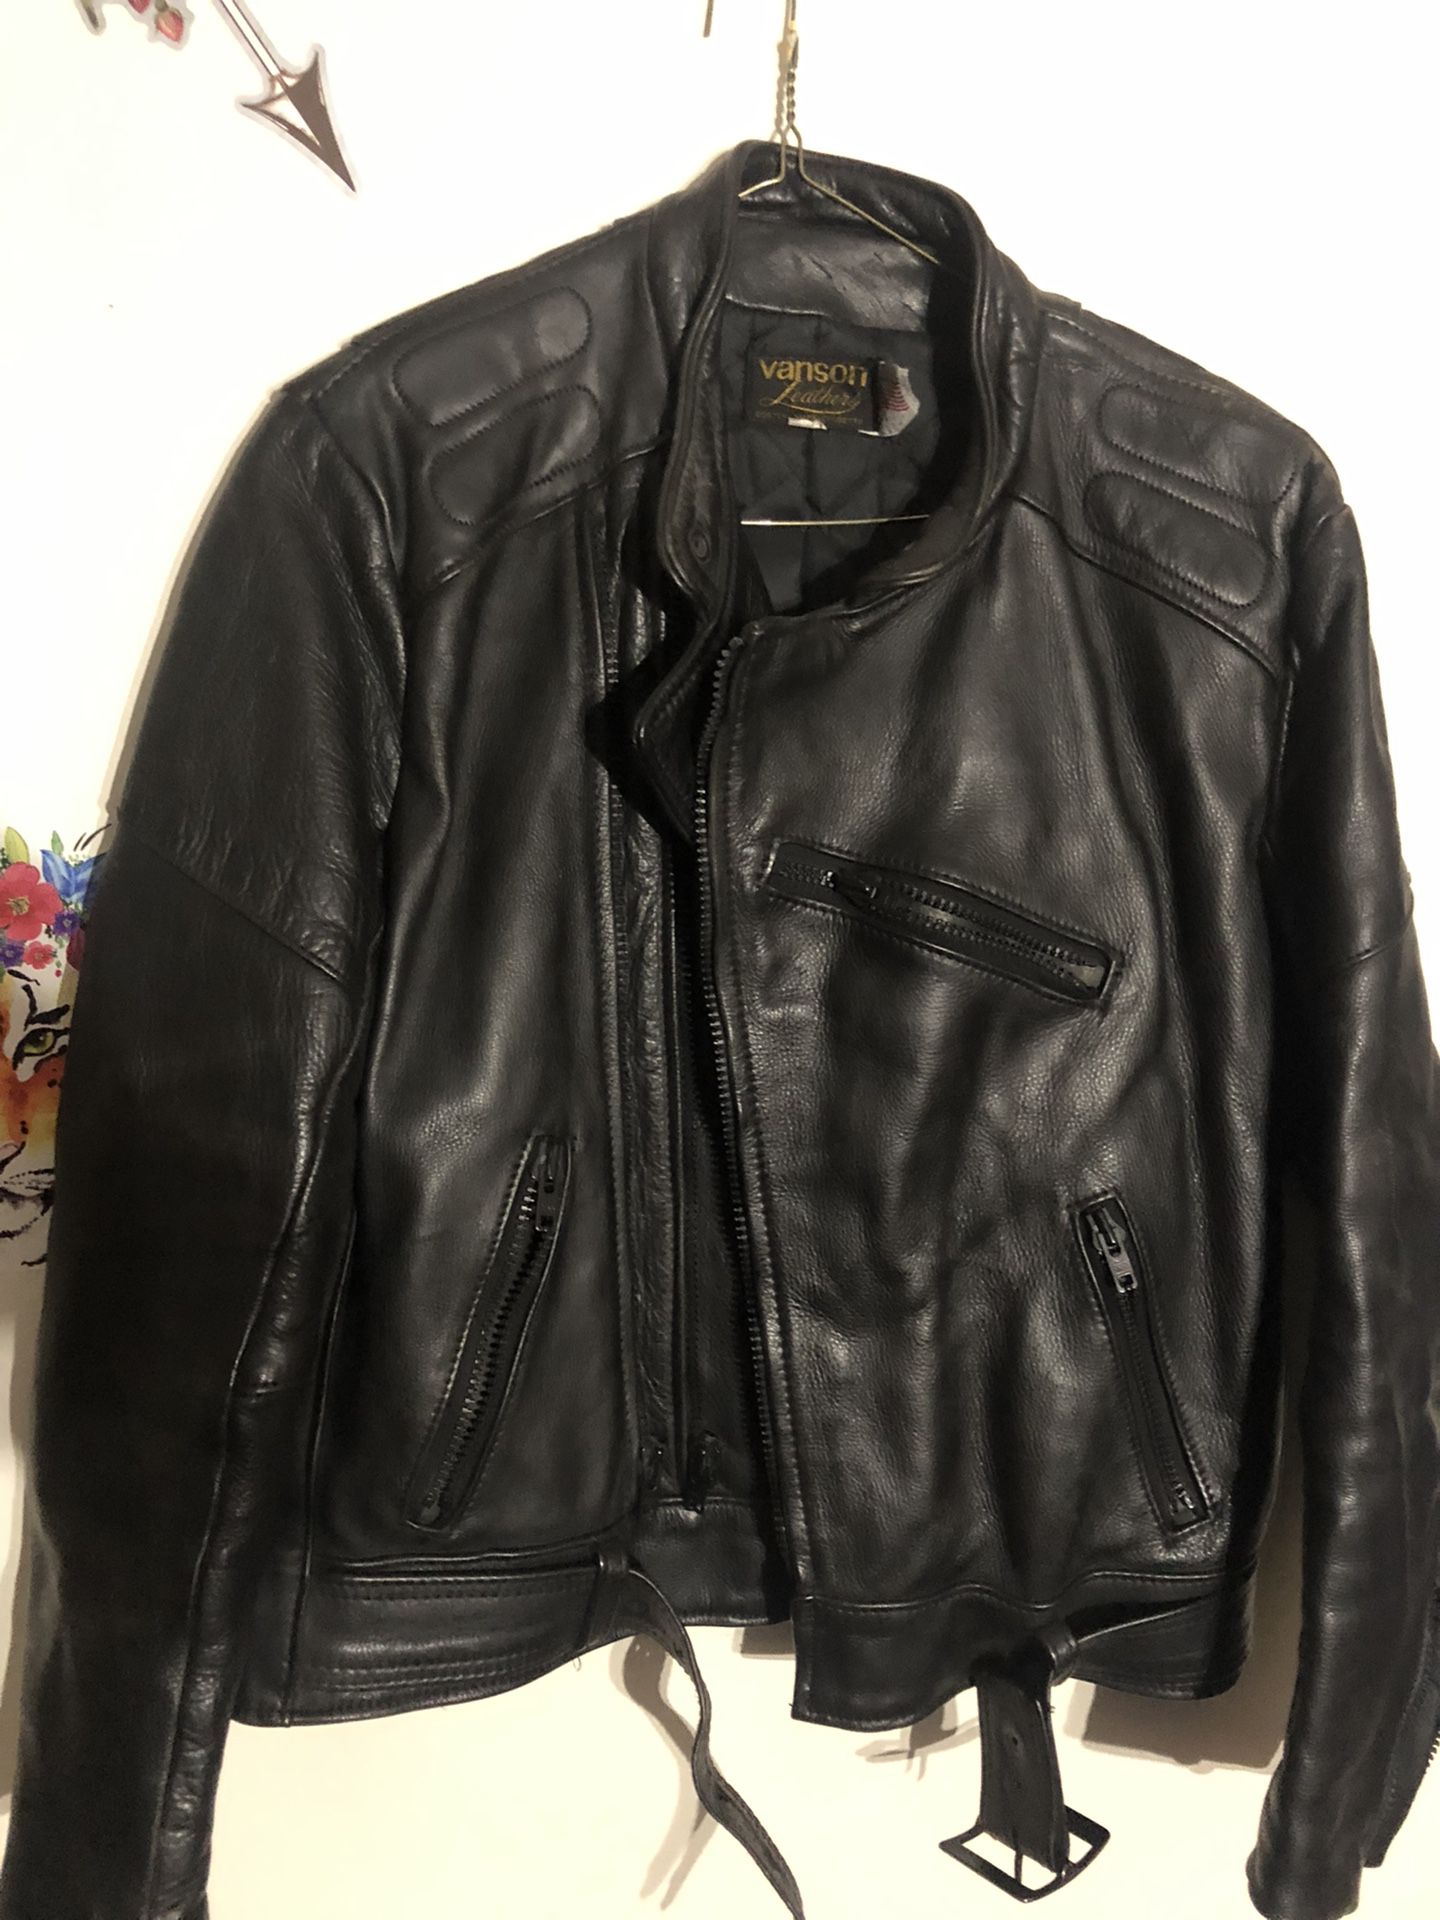 Vanson Leather Motorcycle Leather Jacket 